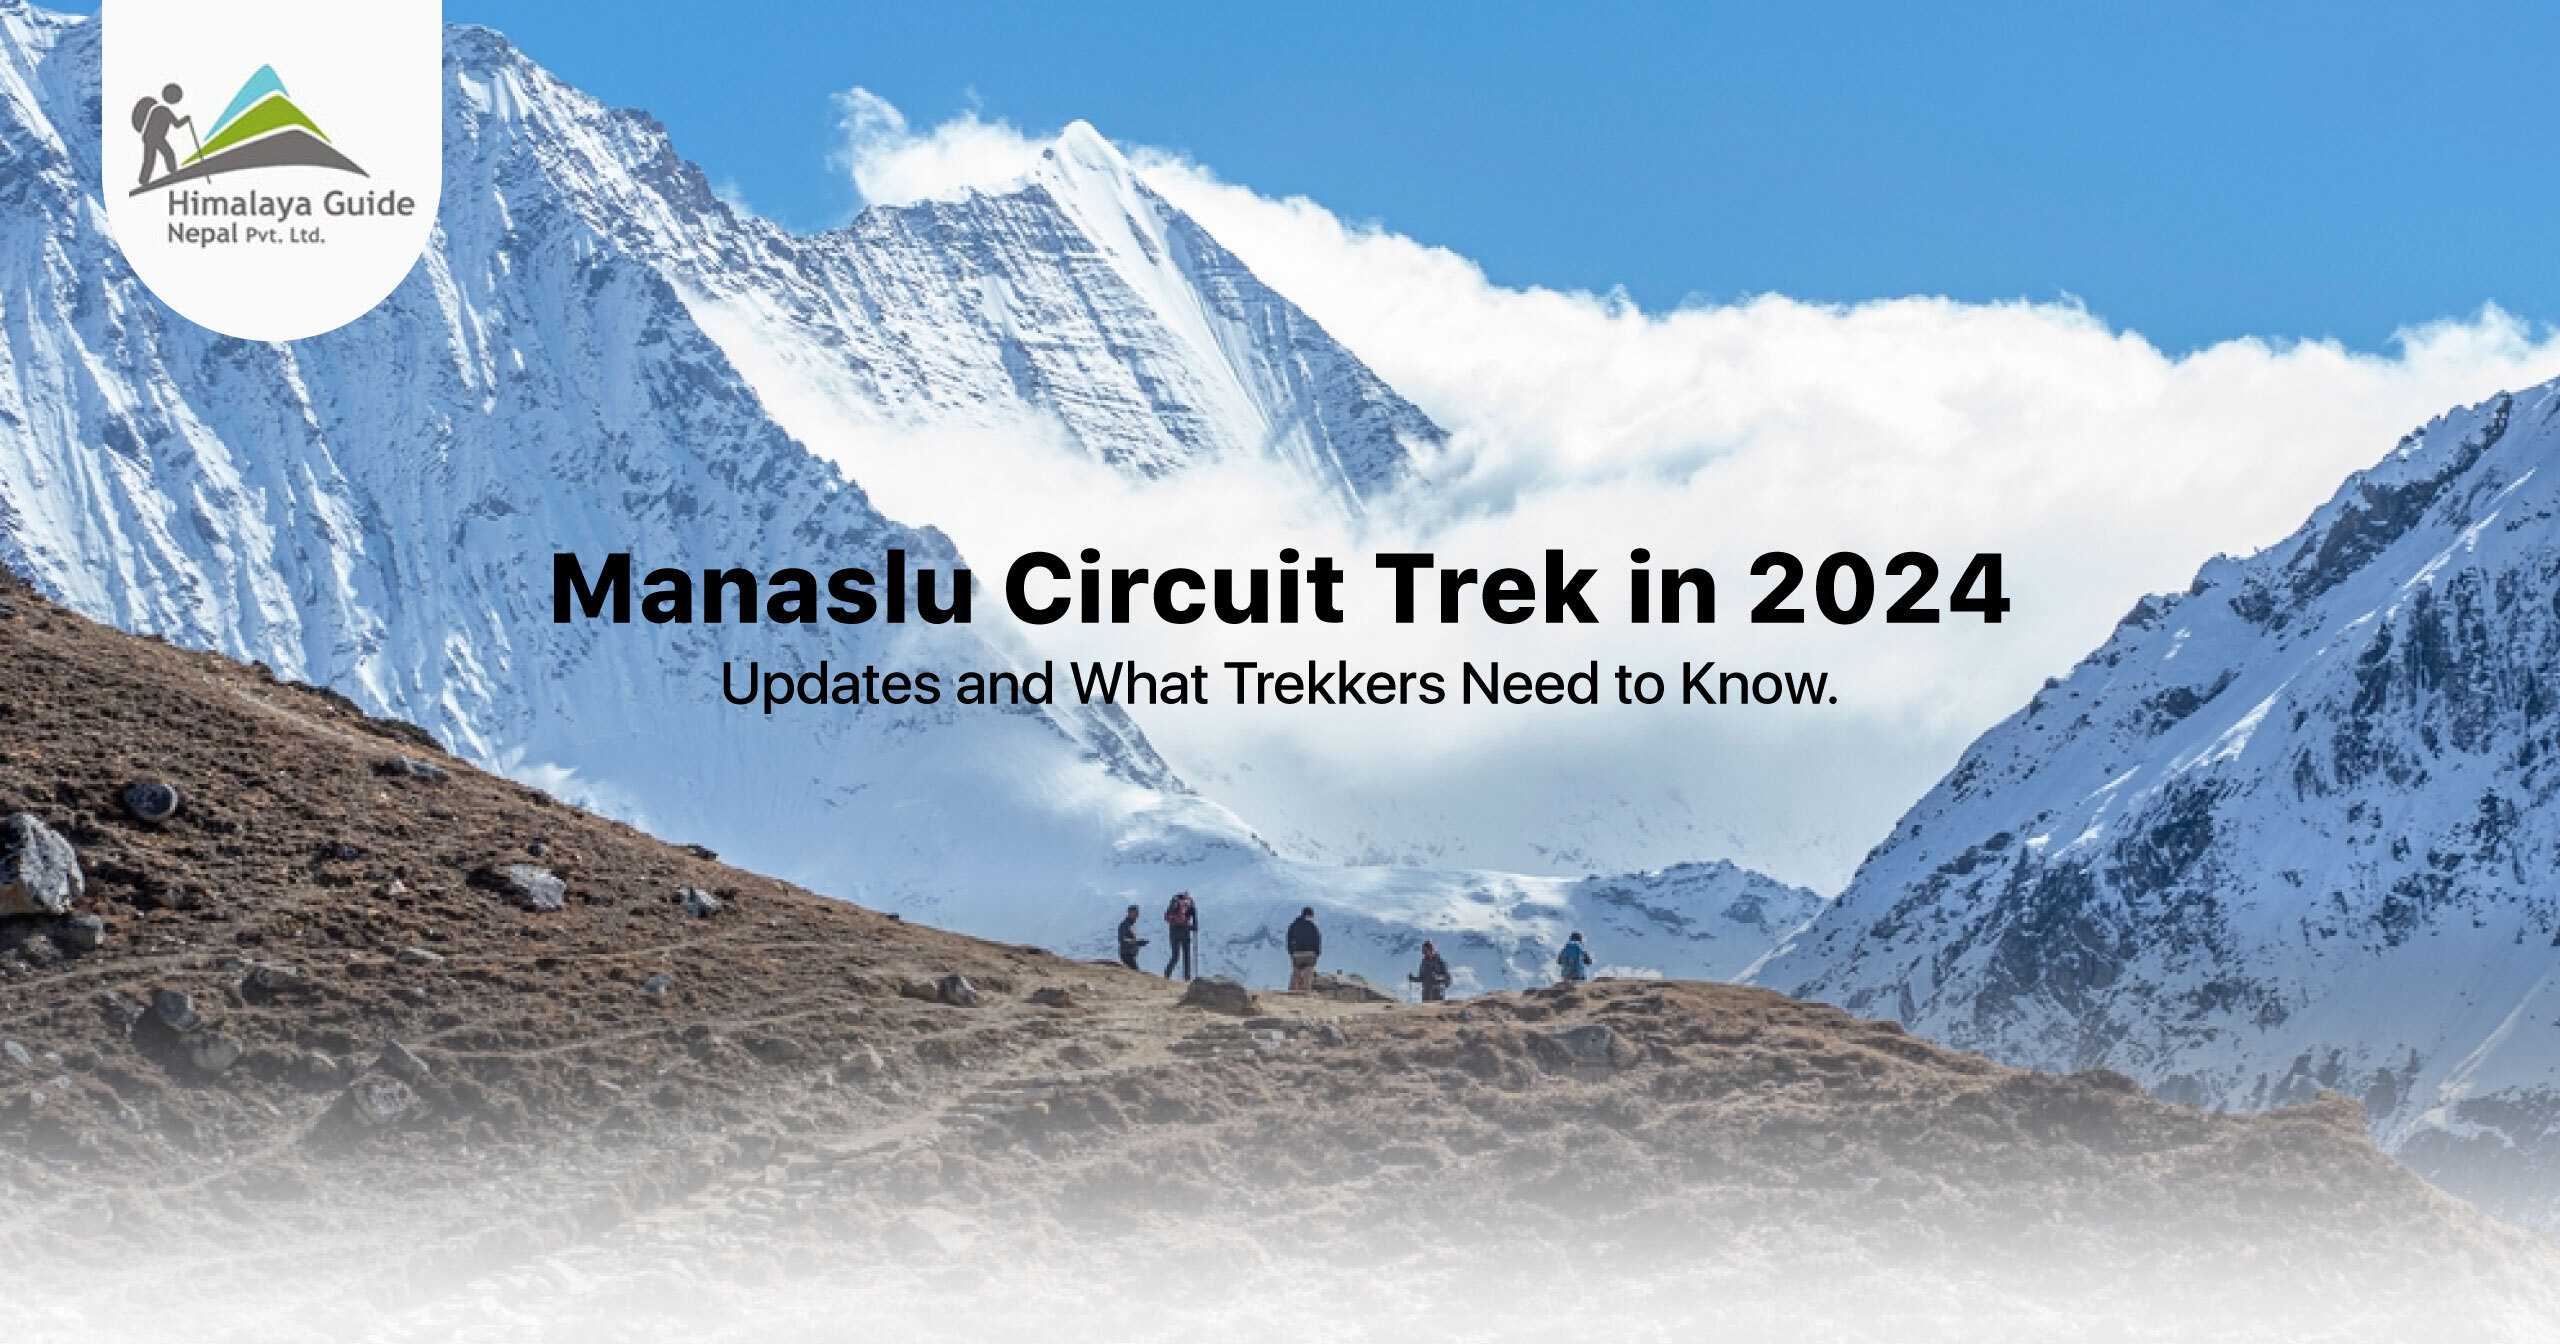 Manaslu Circuit Trek 2024 updates